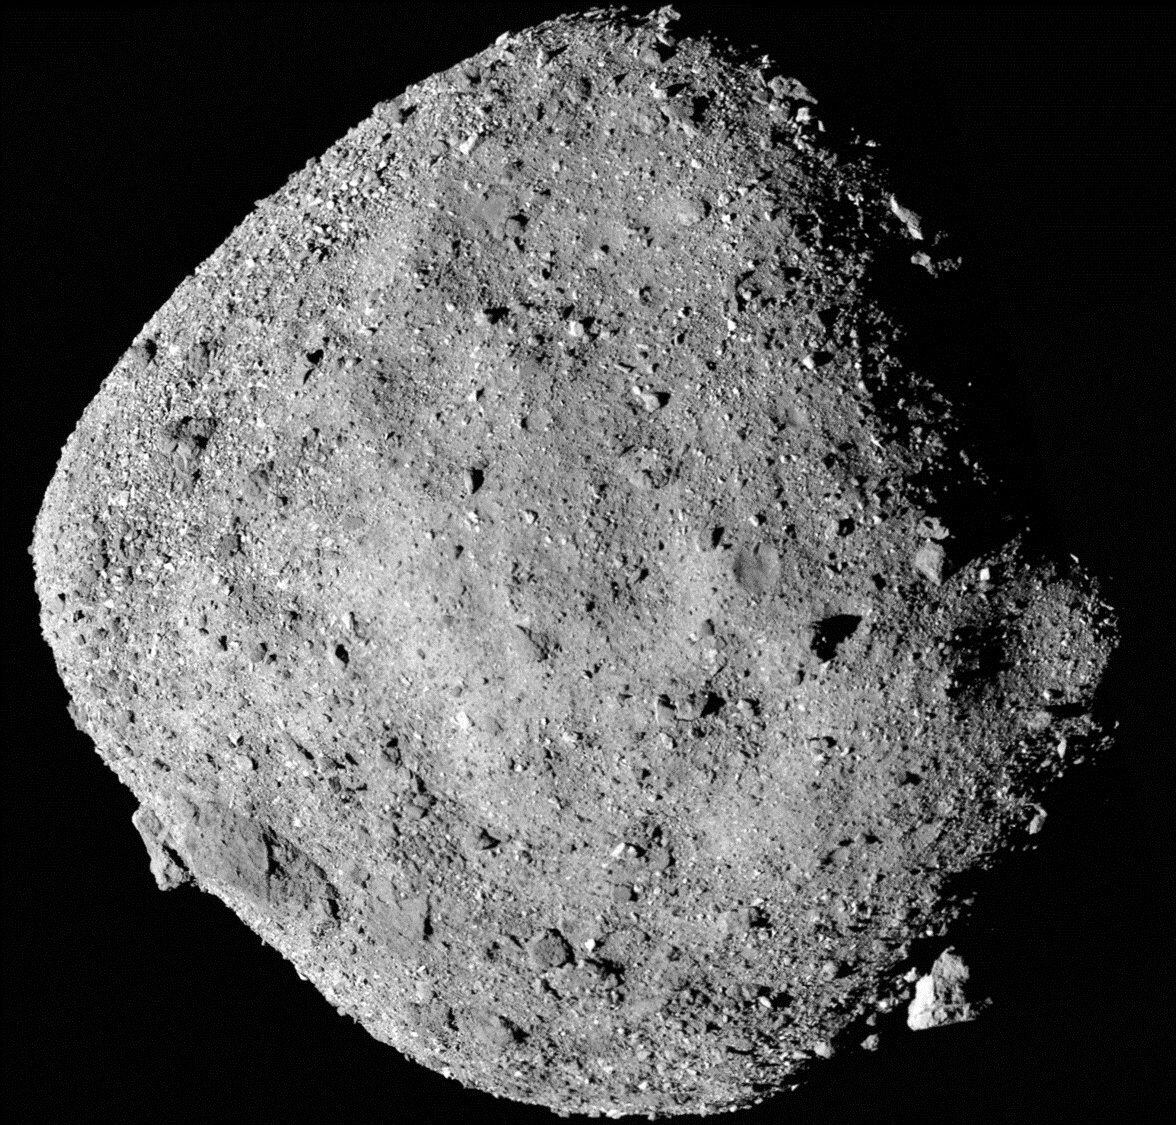 Foto del asteroide Bennu fotografiado a 24 kilómetros de distancia por la nave espacial OSIRIS-REx (NASA/Goddard/University of Arizona/Handout via REUTERS)